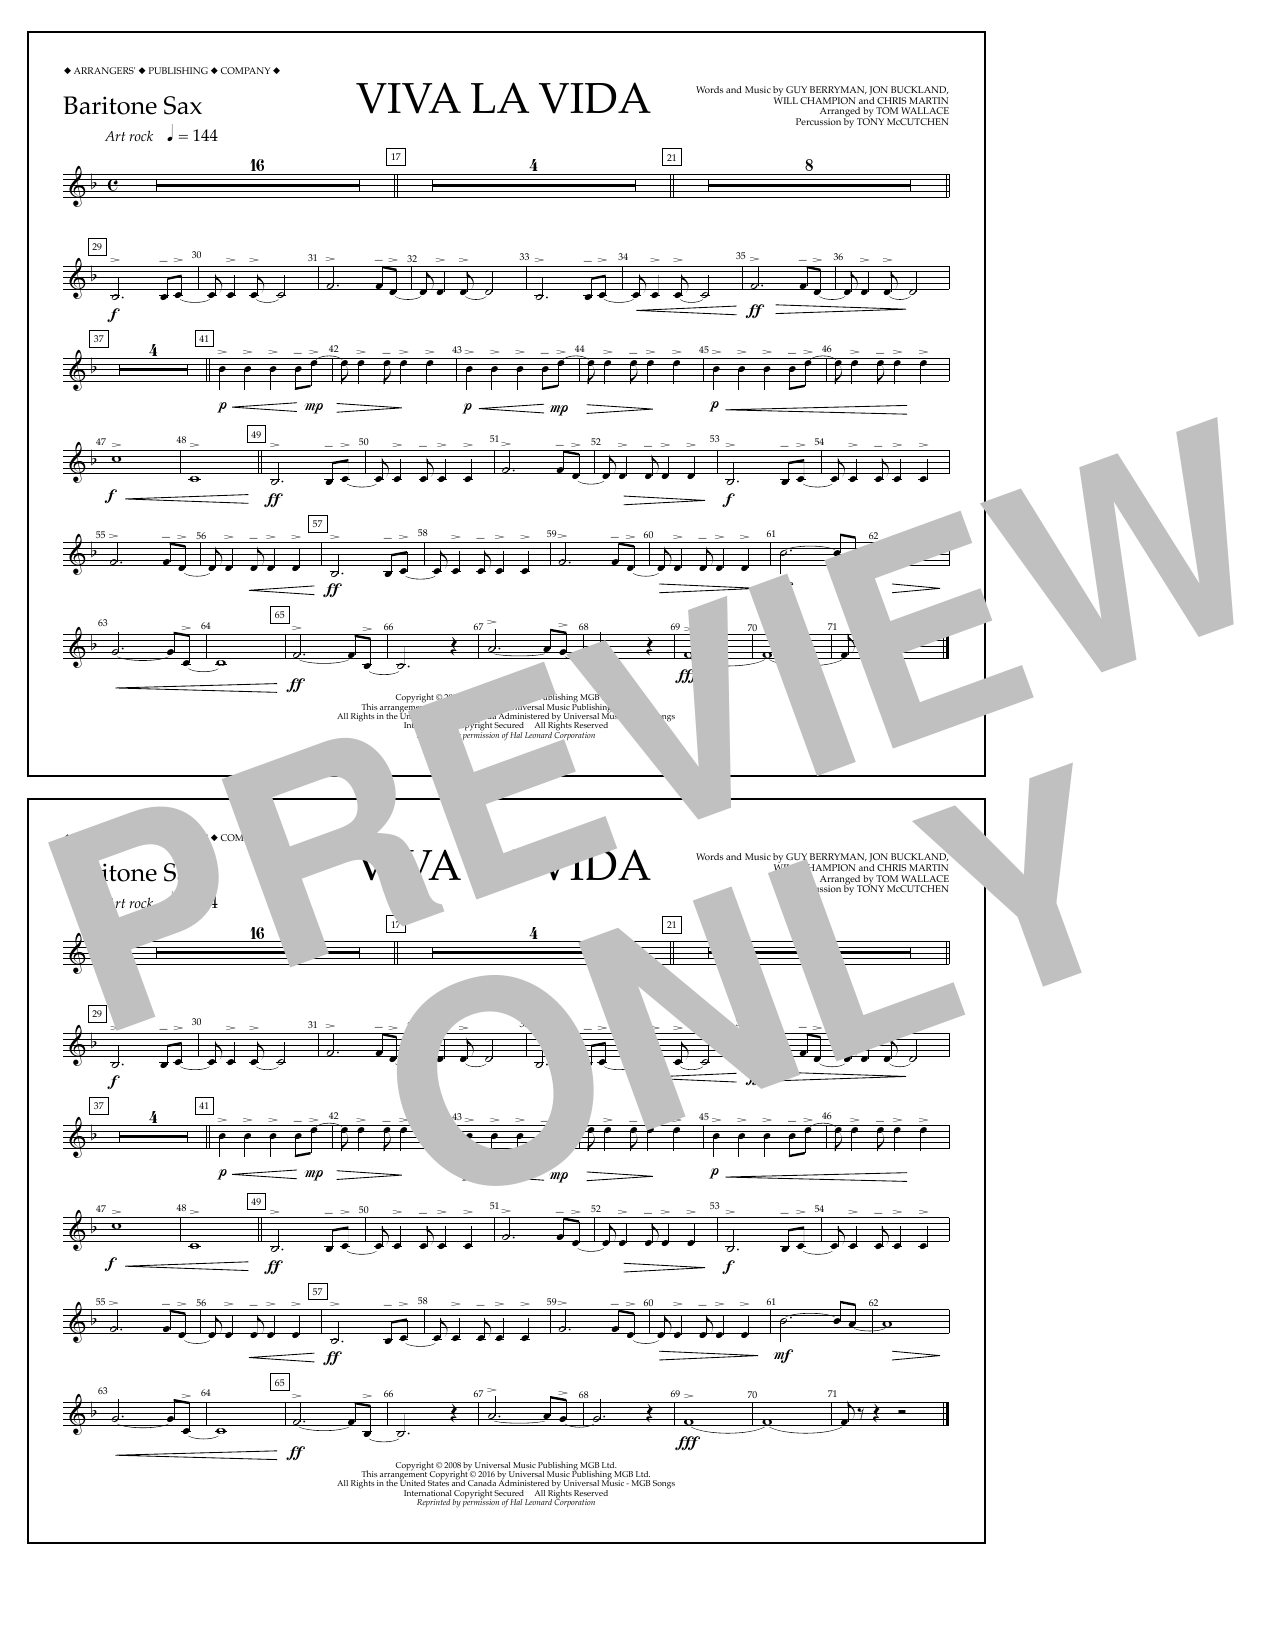 Tom Wallace Viva La Vida - Baritone Sax Sheet Music Notes & Chords for Marching Band - Download or Print PDF